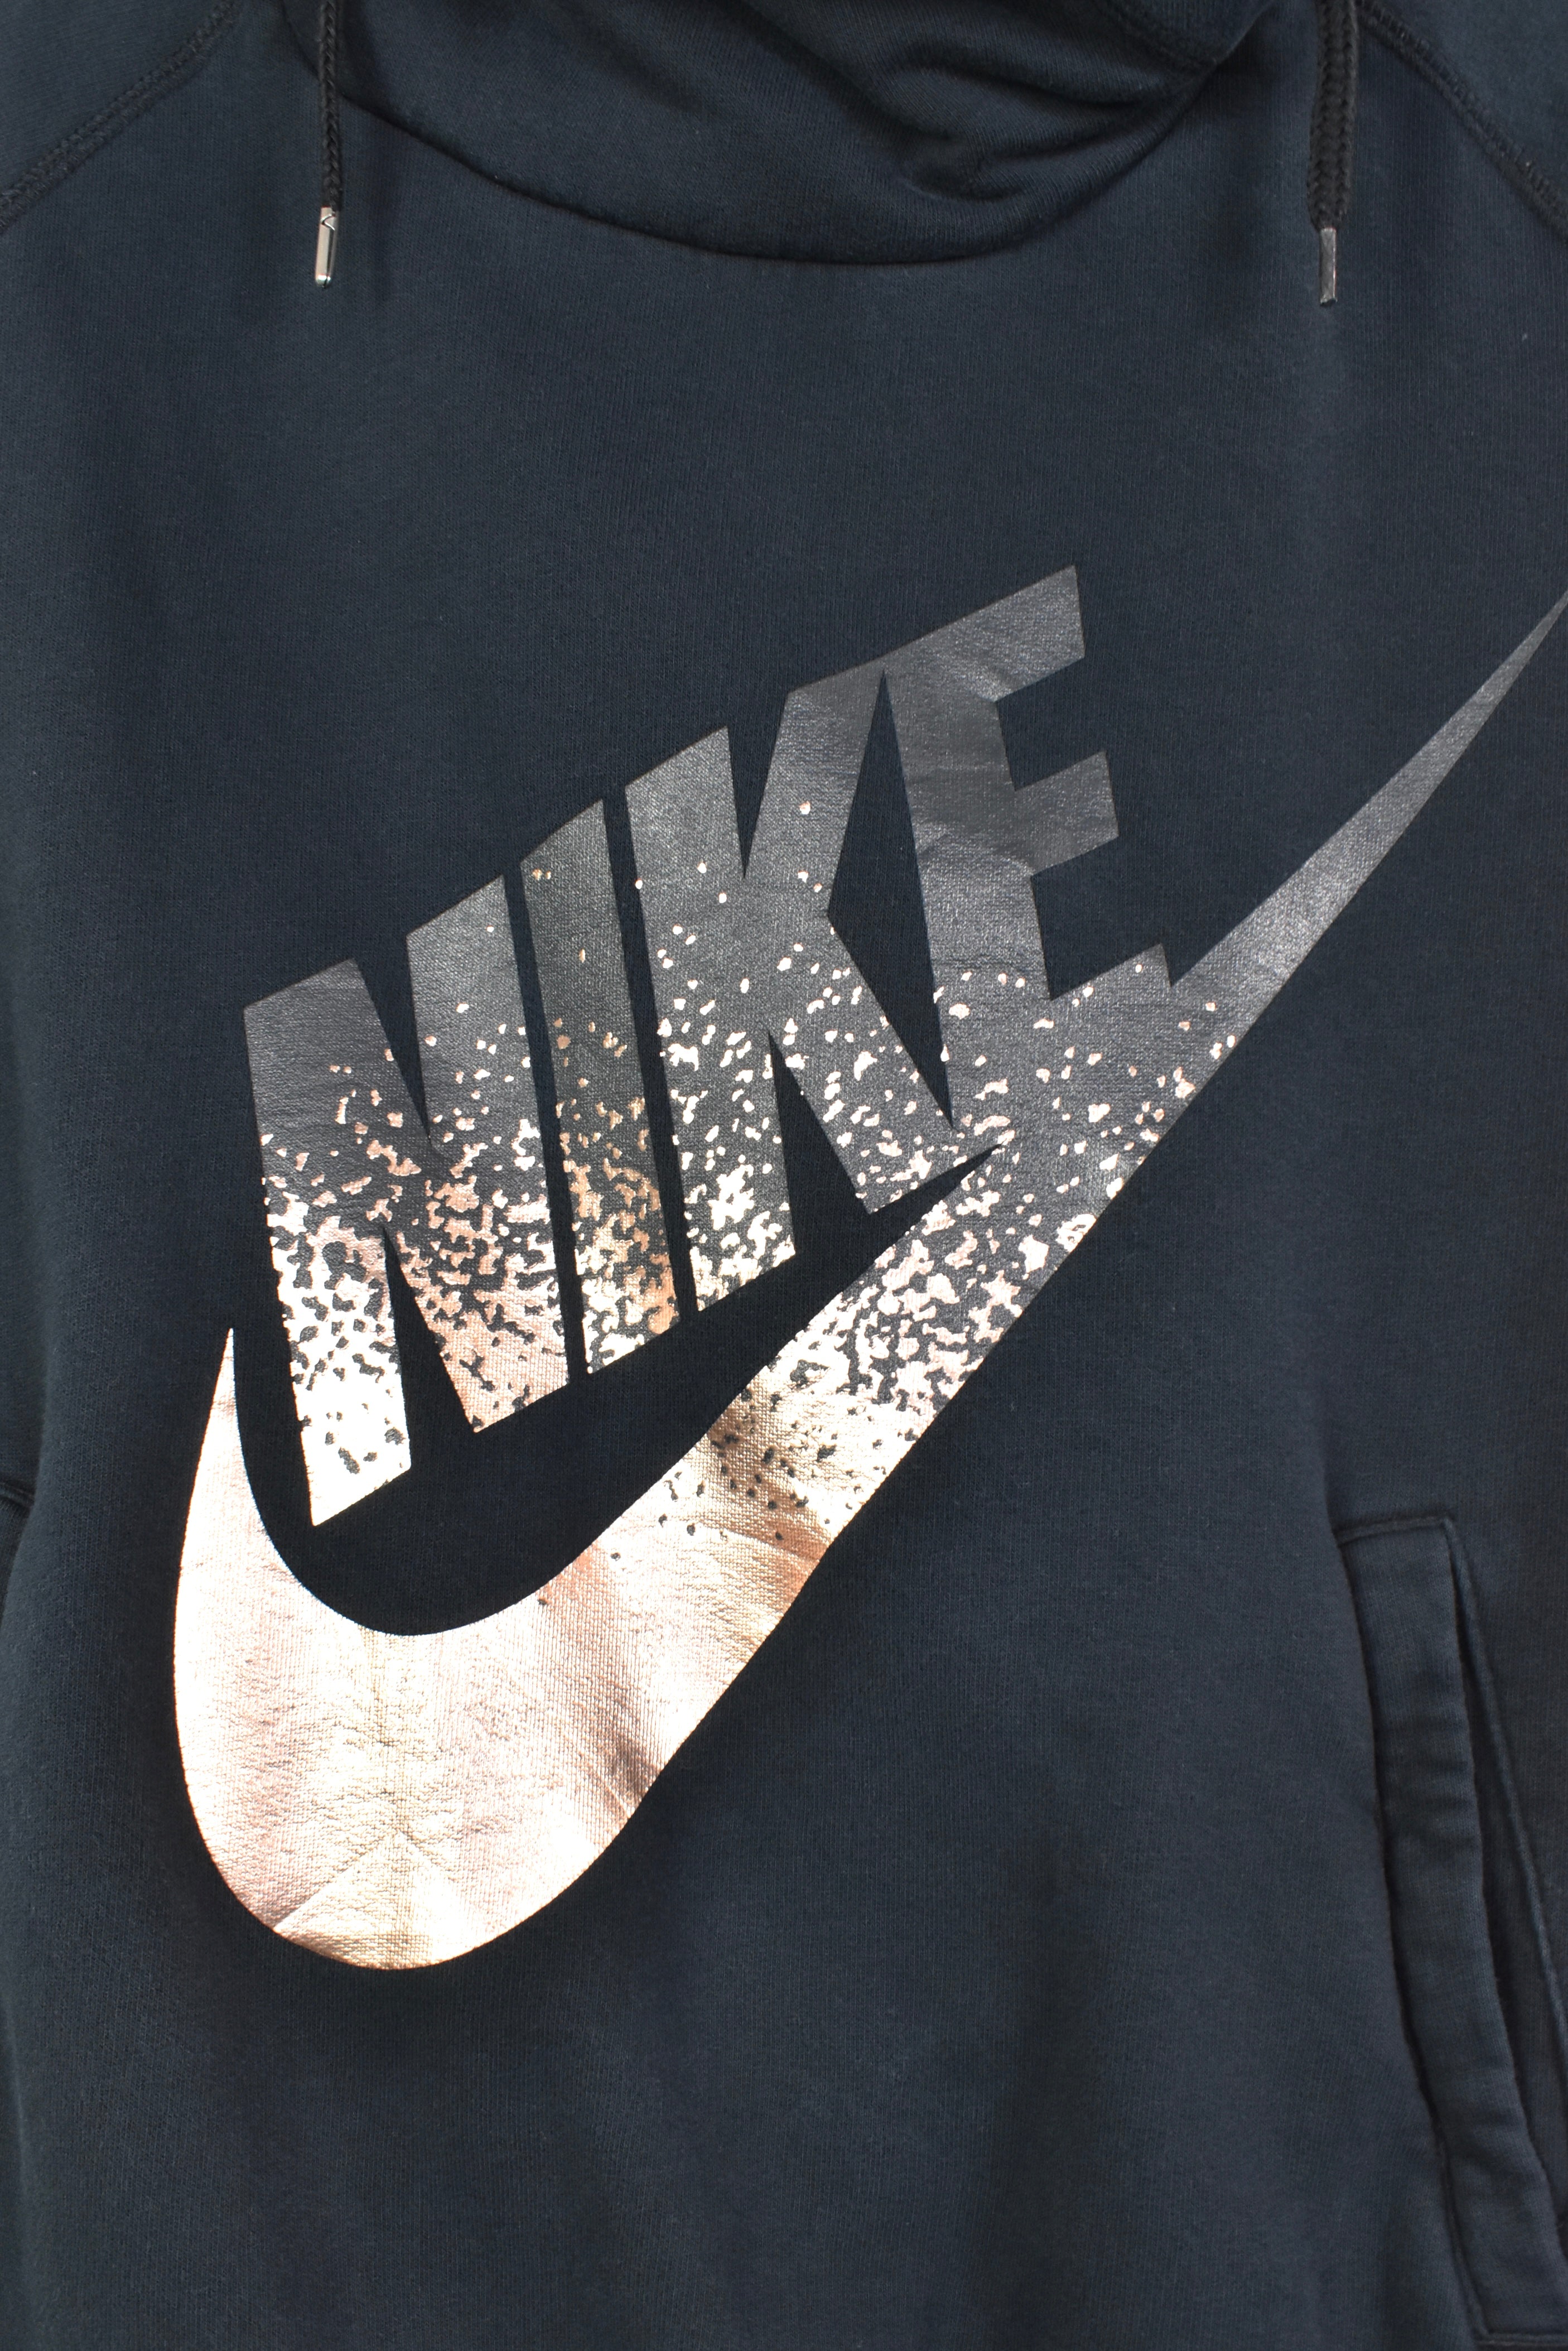 Modern women's Nike hoodie, black graphic sweatshirt - XL NIKE